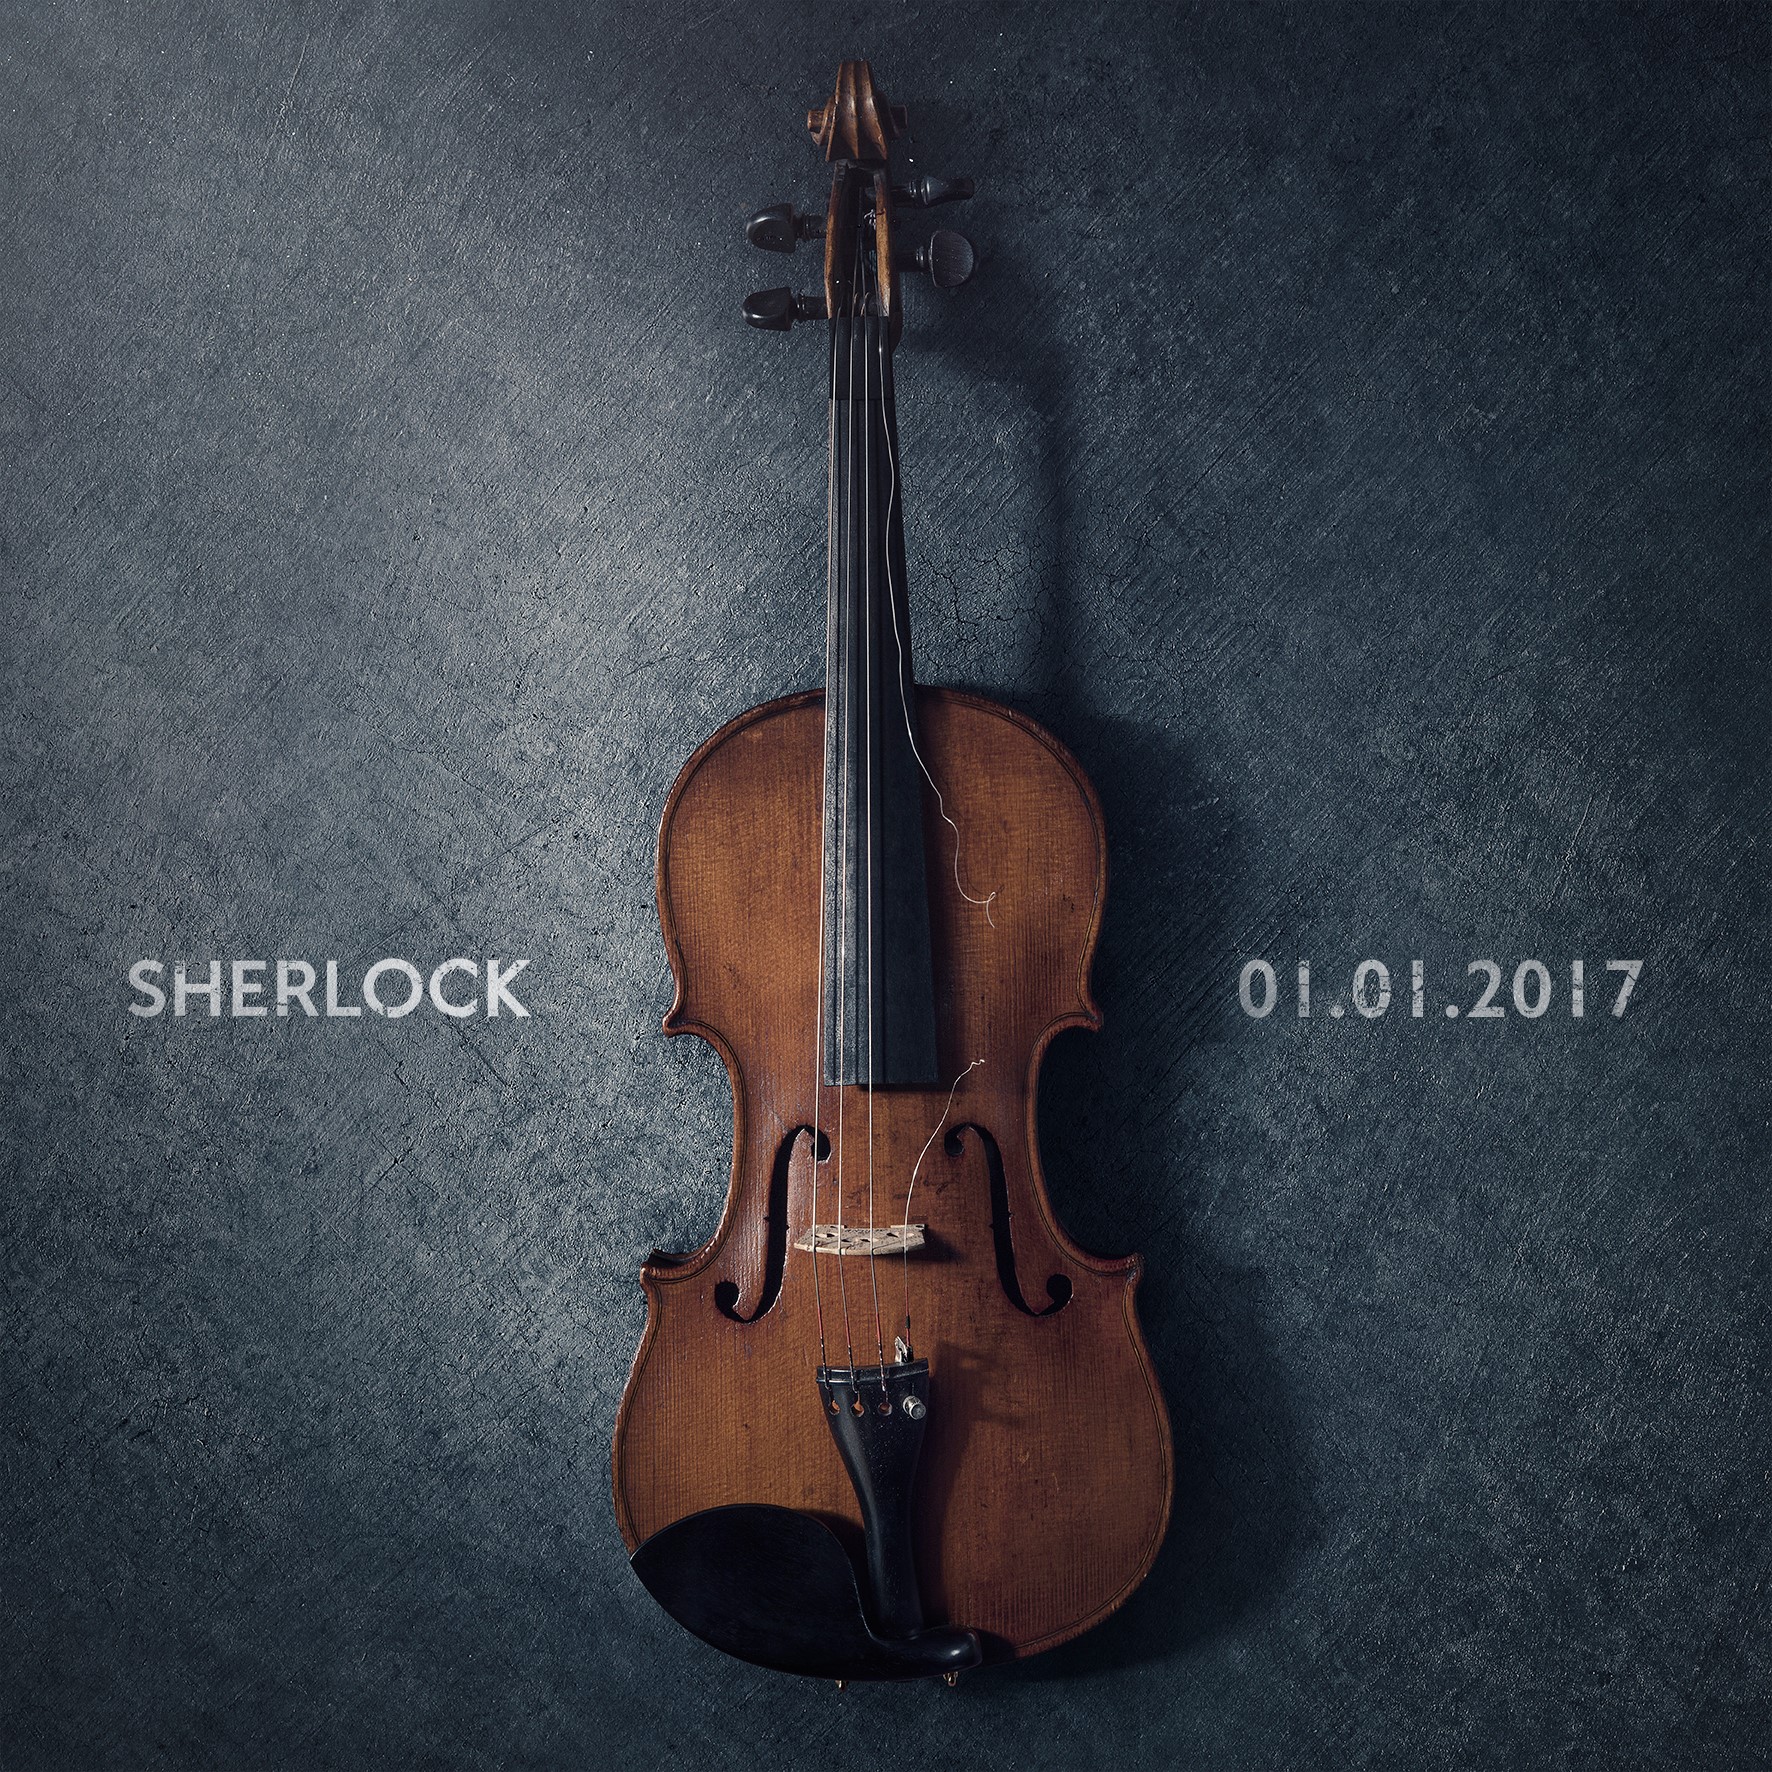 Sherlock Returns on January 1, 2017